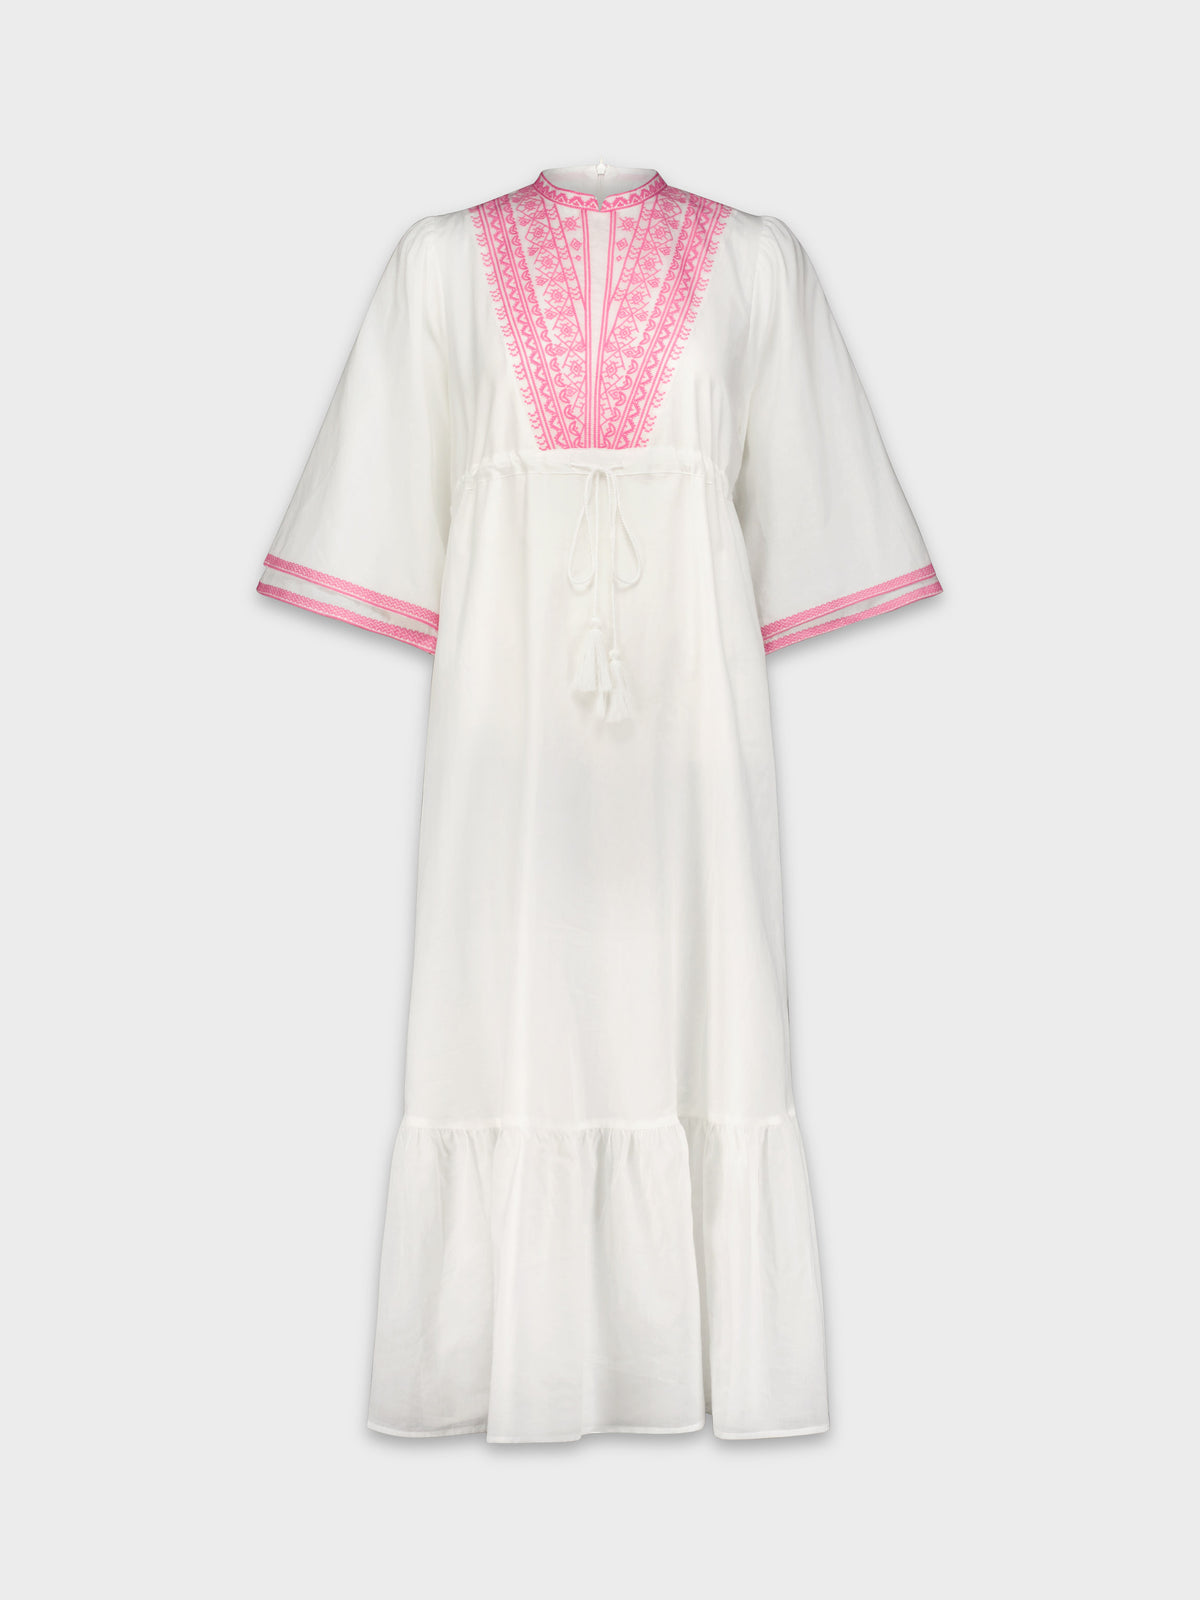 EMBROIDERED BOHO DRESS-WHITE/PINK